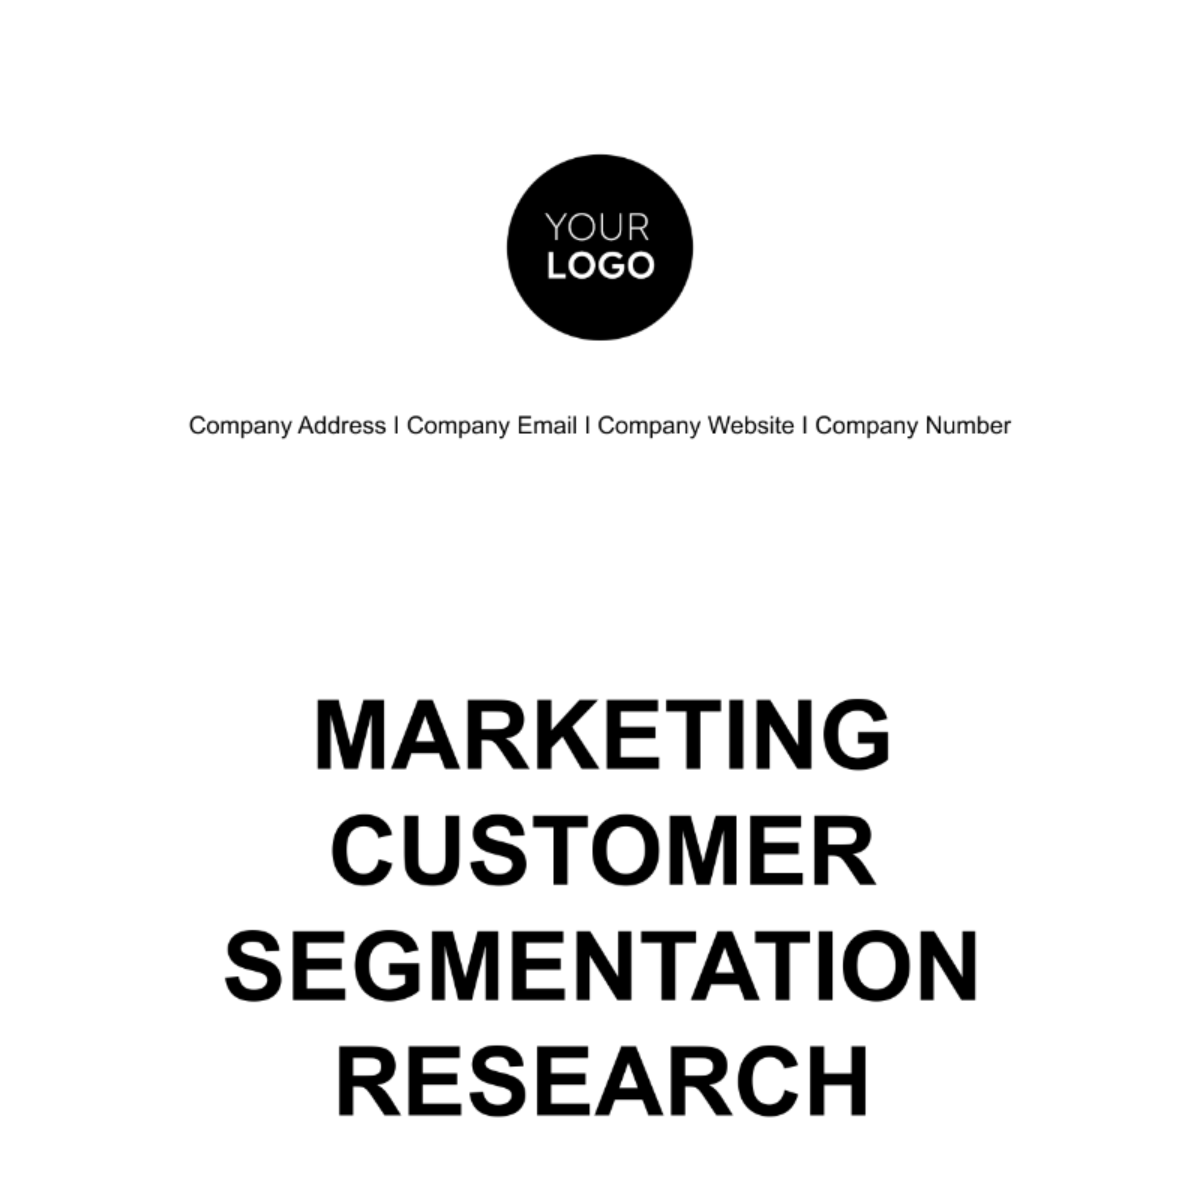 Free Marketing Customer Segmentation Research Template